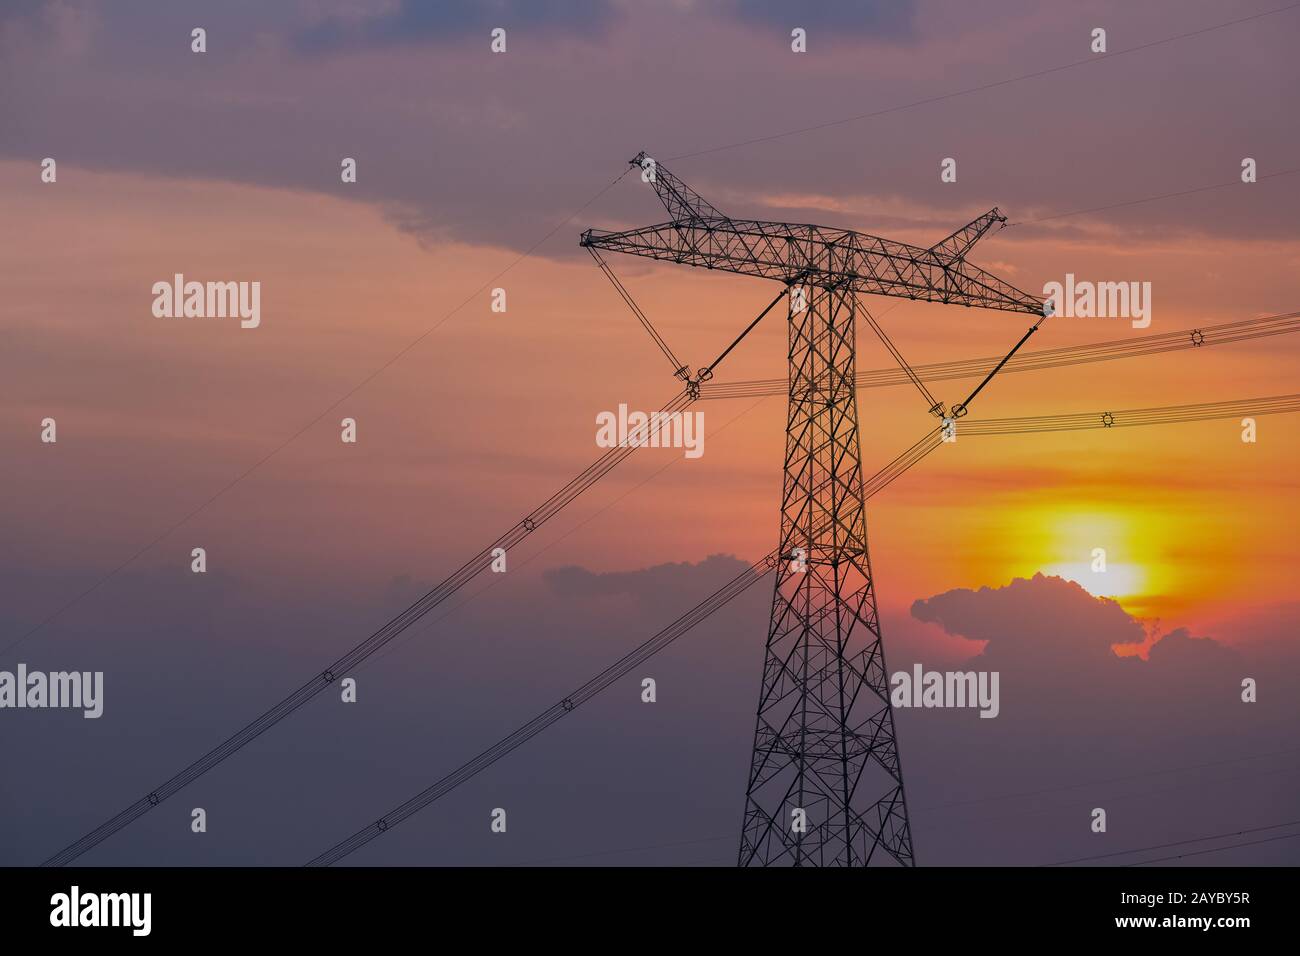 power transmission pylon in sunset Stock Photo